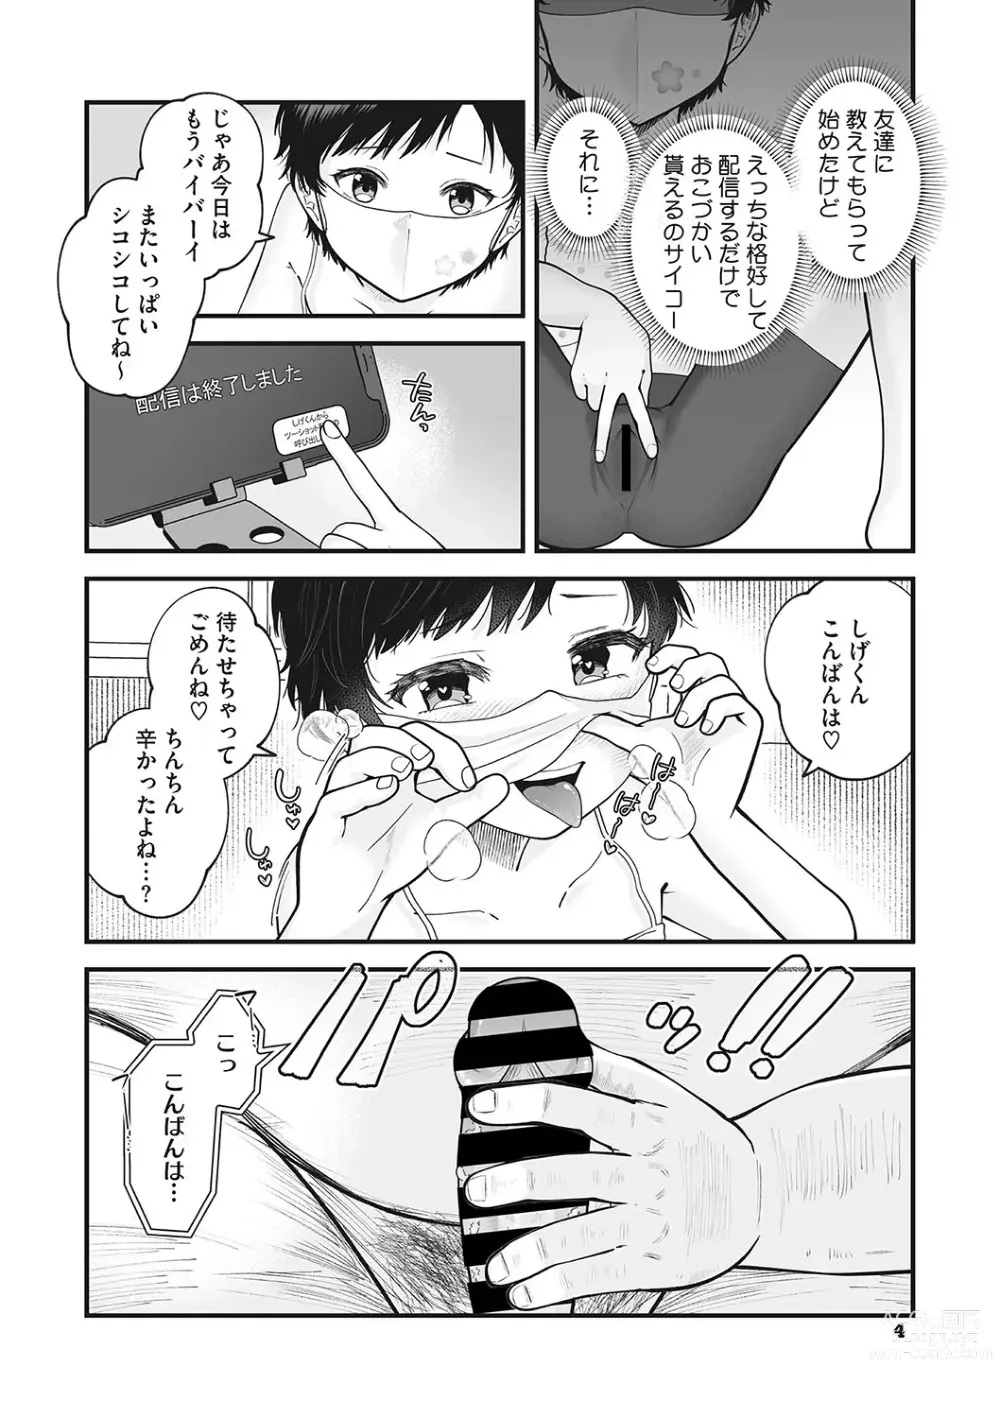 Page 5 of manga Little Girl Strike Vol. 30